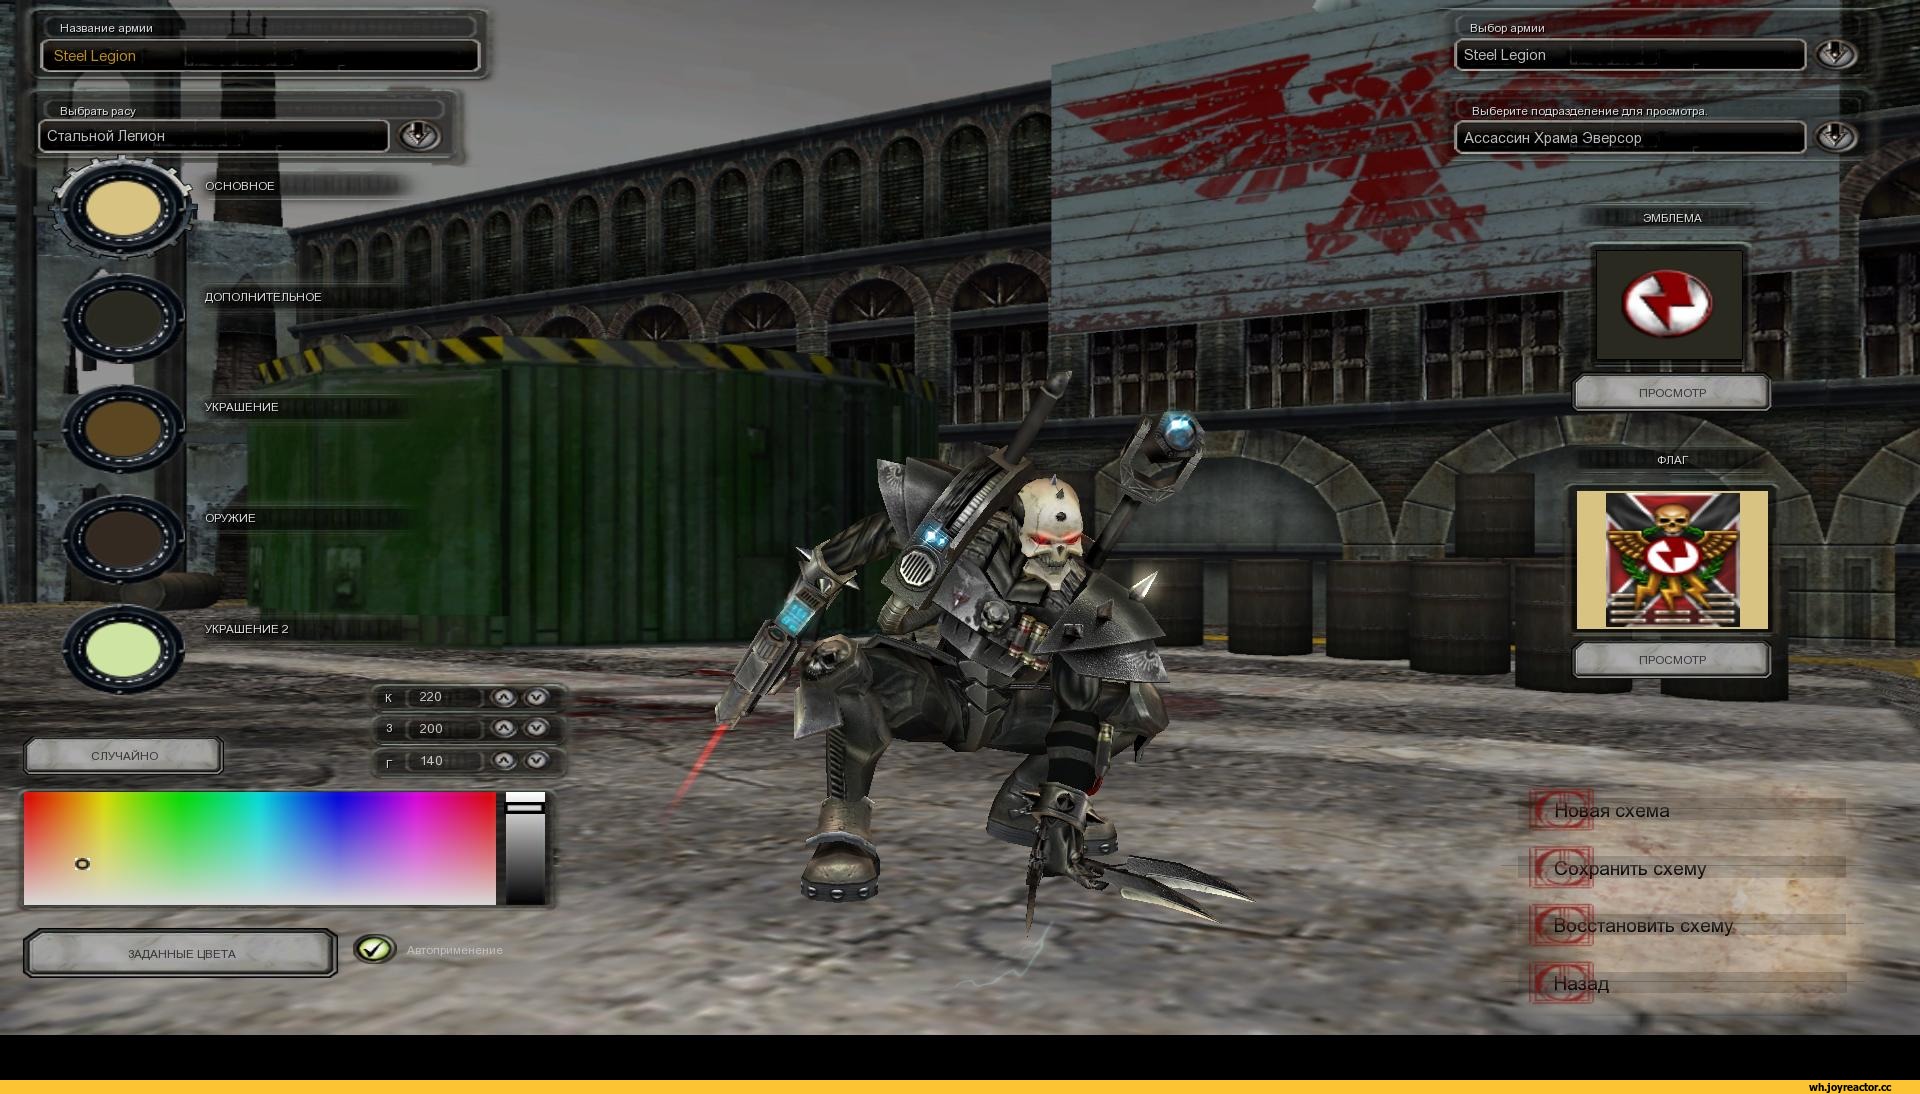 Heavy Elite Eversor Assassin image - Warhammer 40K Fan Group.